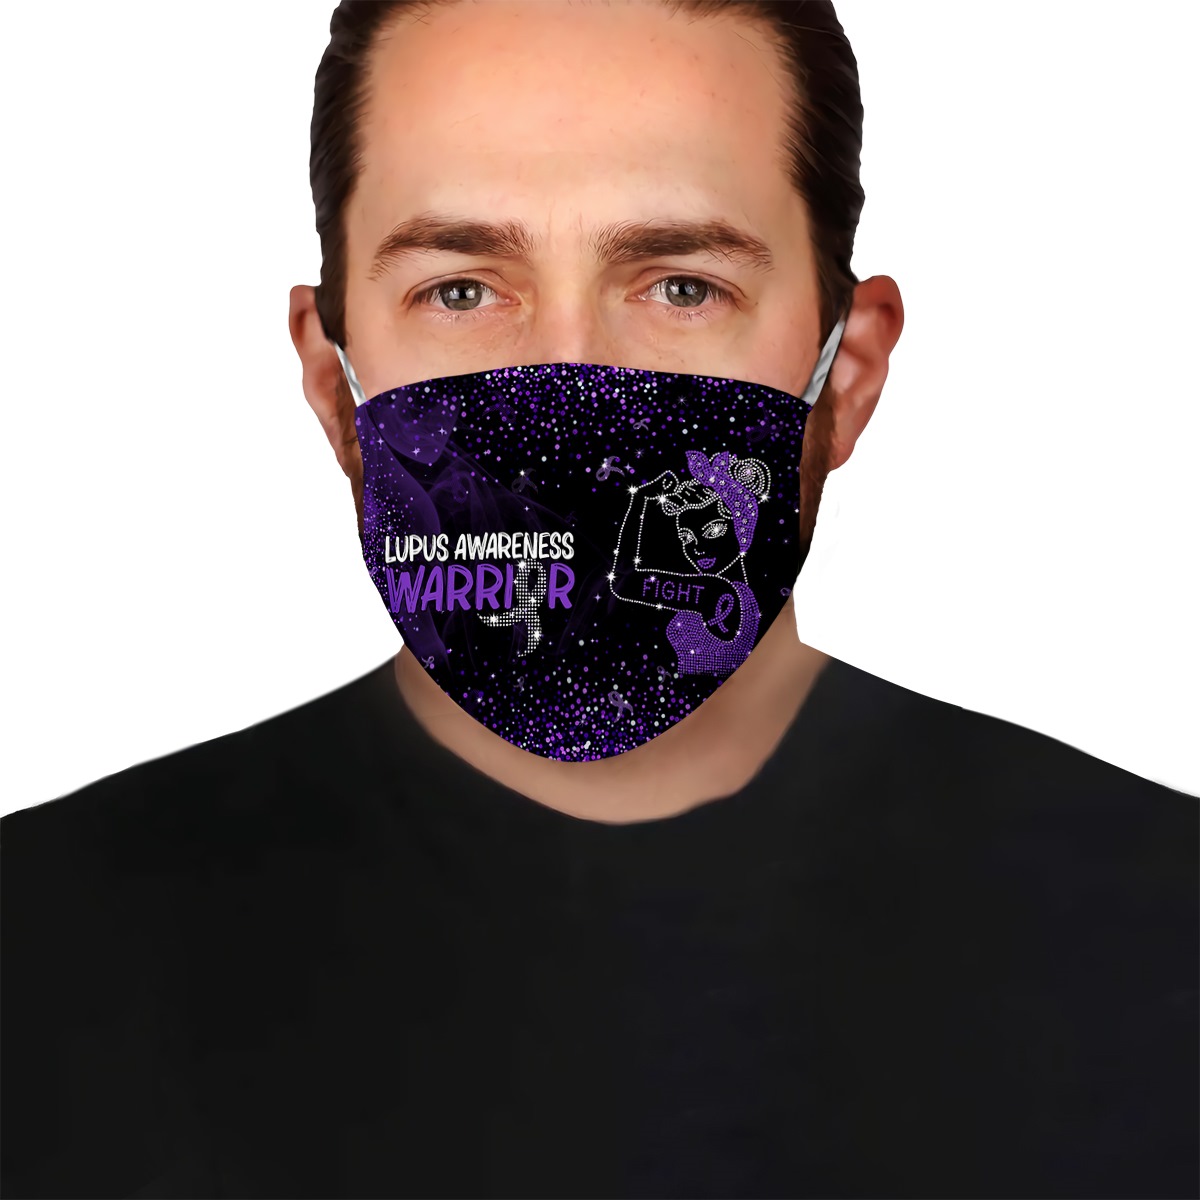 Fight lupus awareness warrior face mask - detail